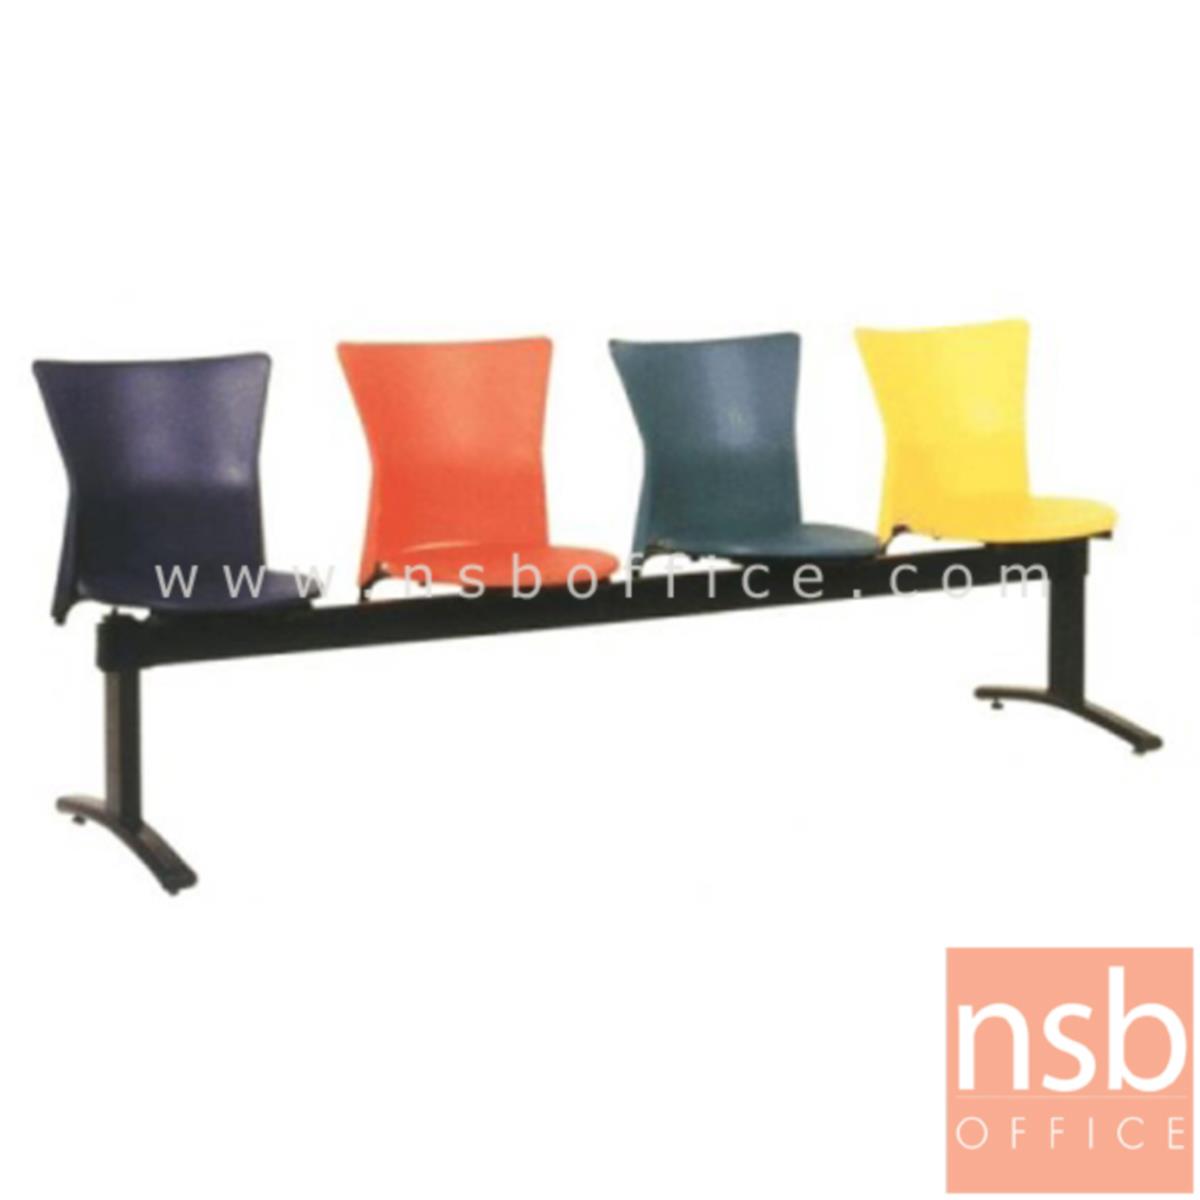 B06A046:เก้าอี้นั่งคอยเฟรมโพลี่ทรงถ้วย รุ่น B321 2 ,3 ,4 ที่นั่ง ขนาด 94W ,150W ,205W cm. ขาเหล็ก